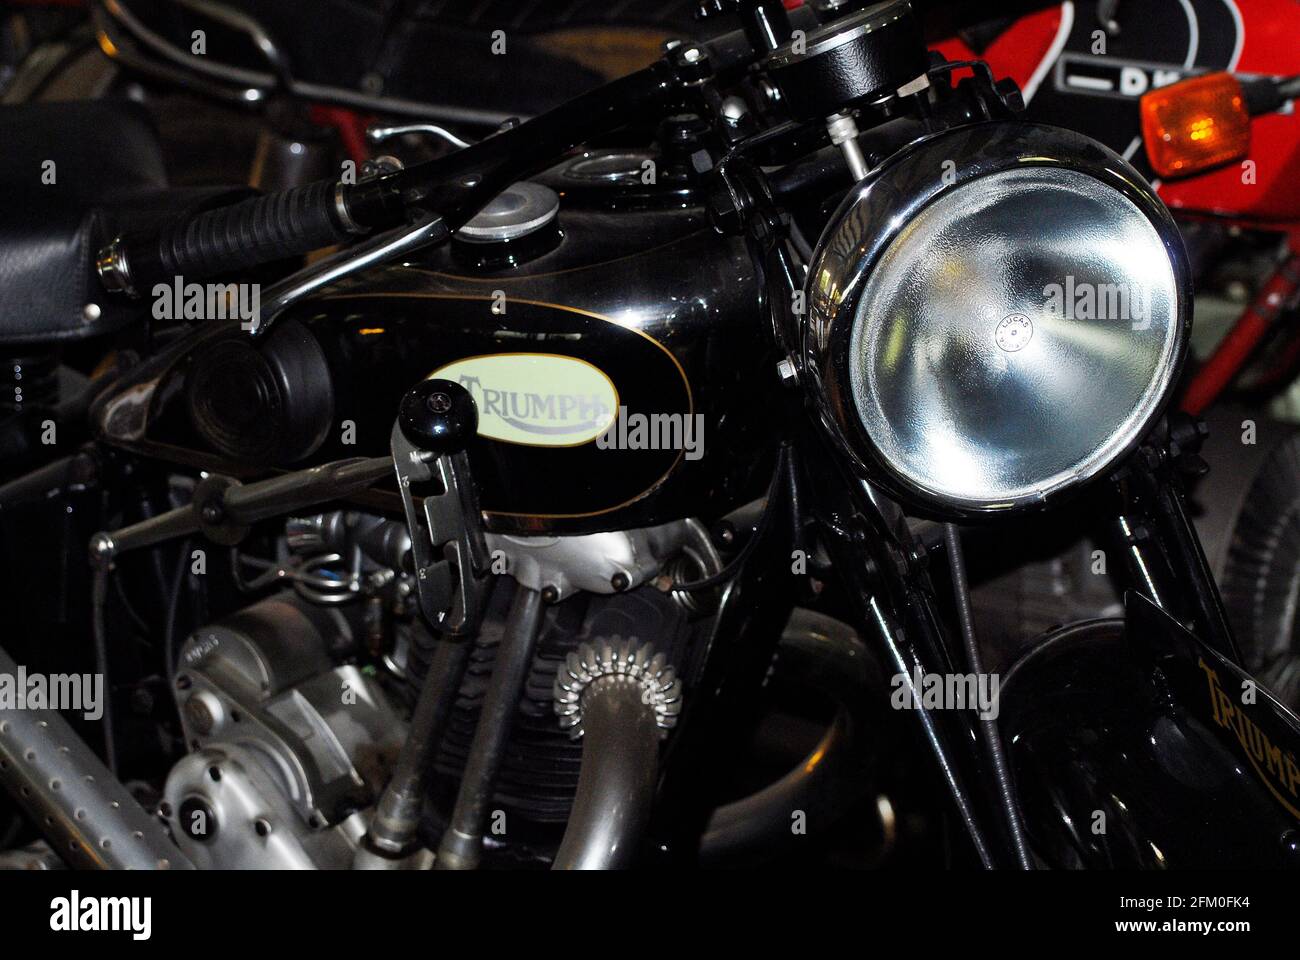 DREAM BIKES, Triumph Bike, Panini Museum, Modena, Italy Stock Photo - Alamy